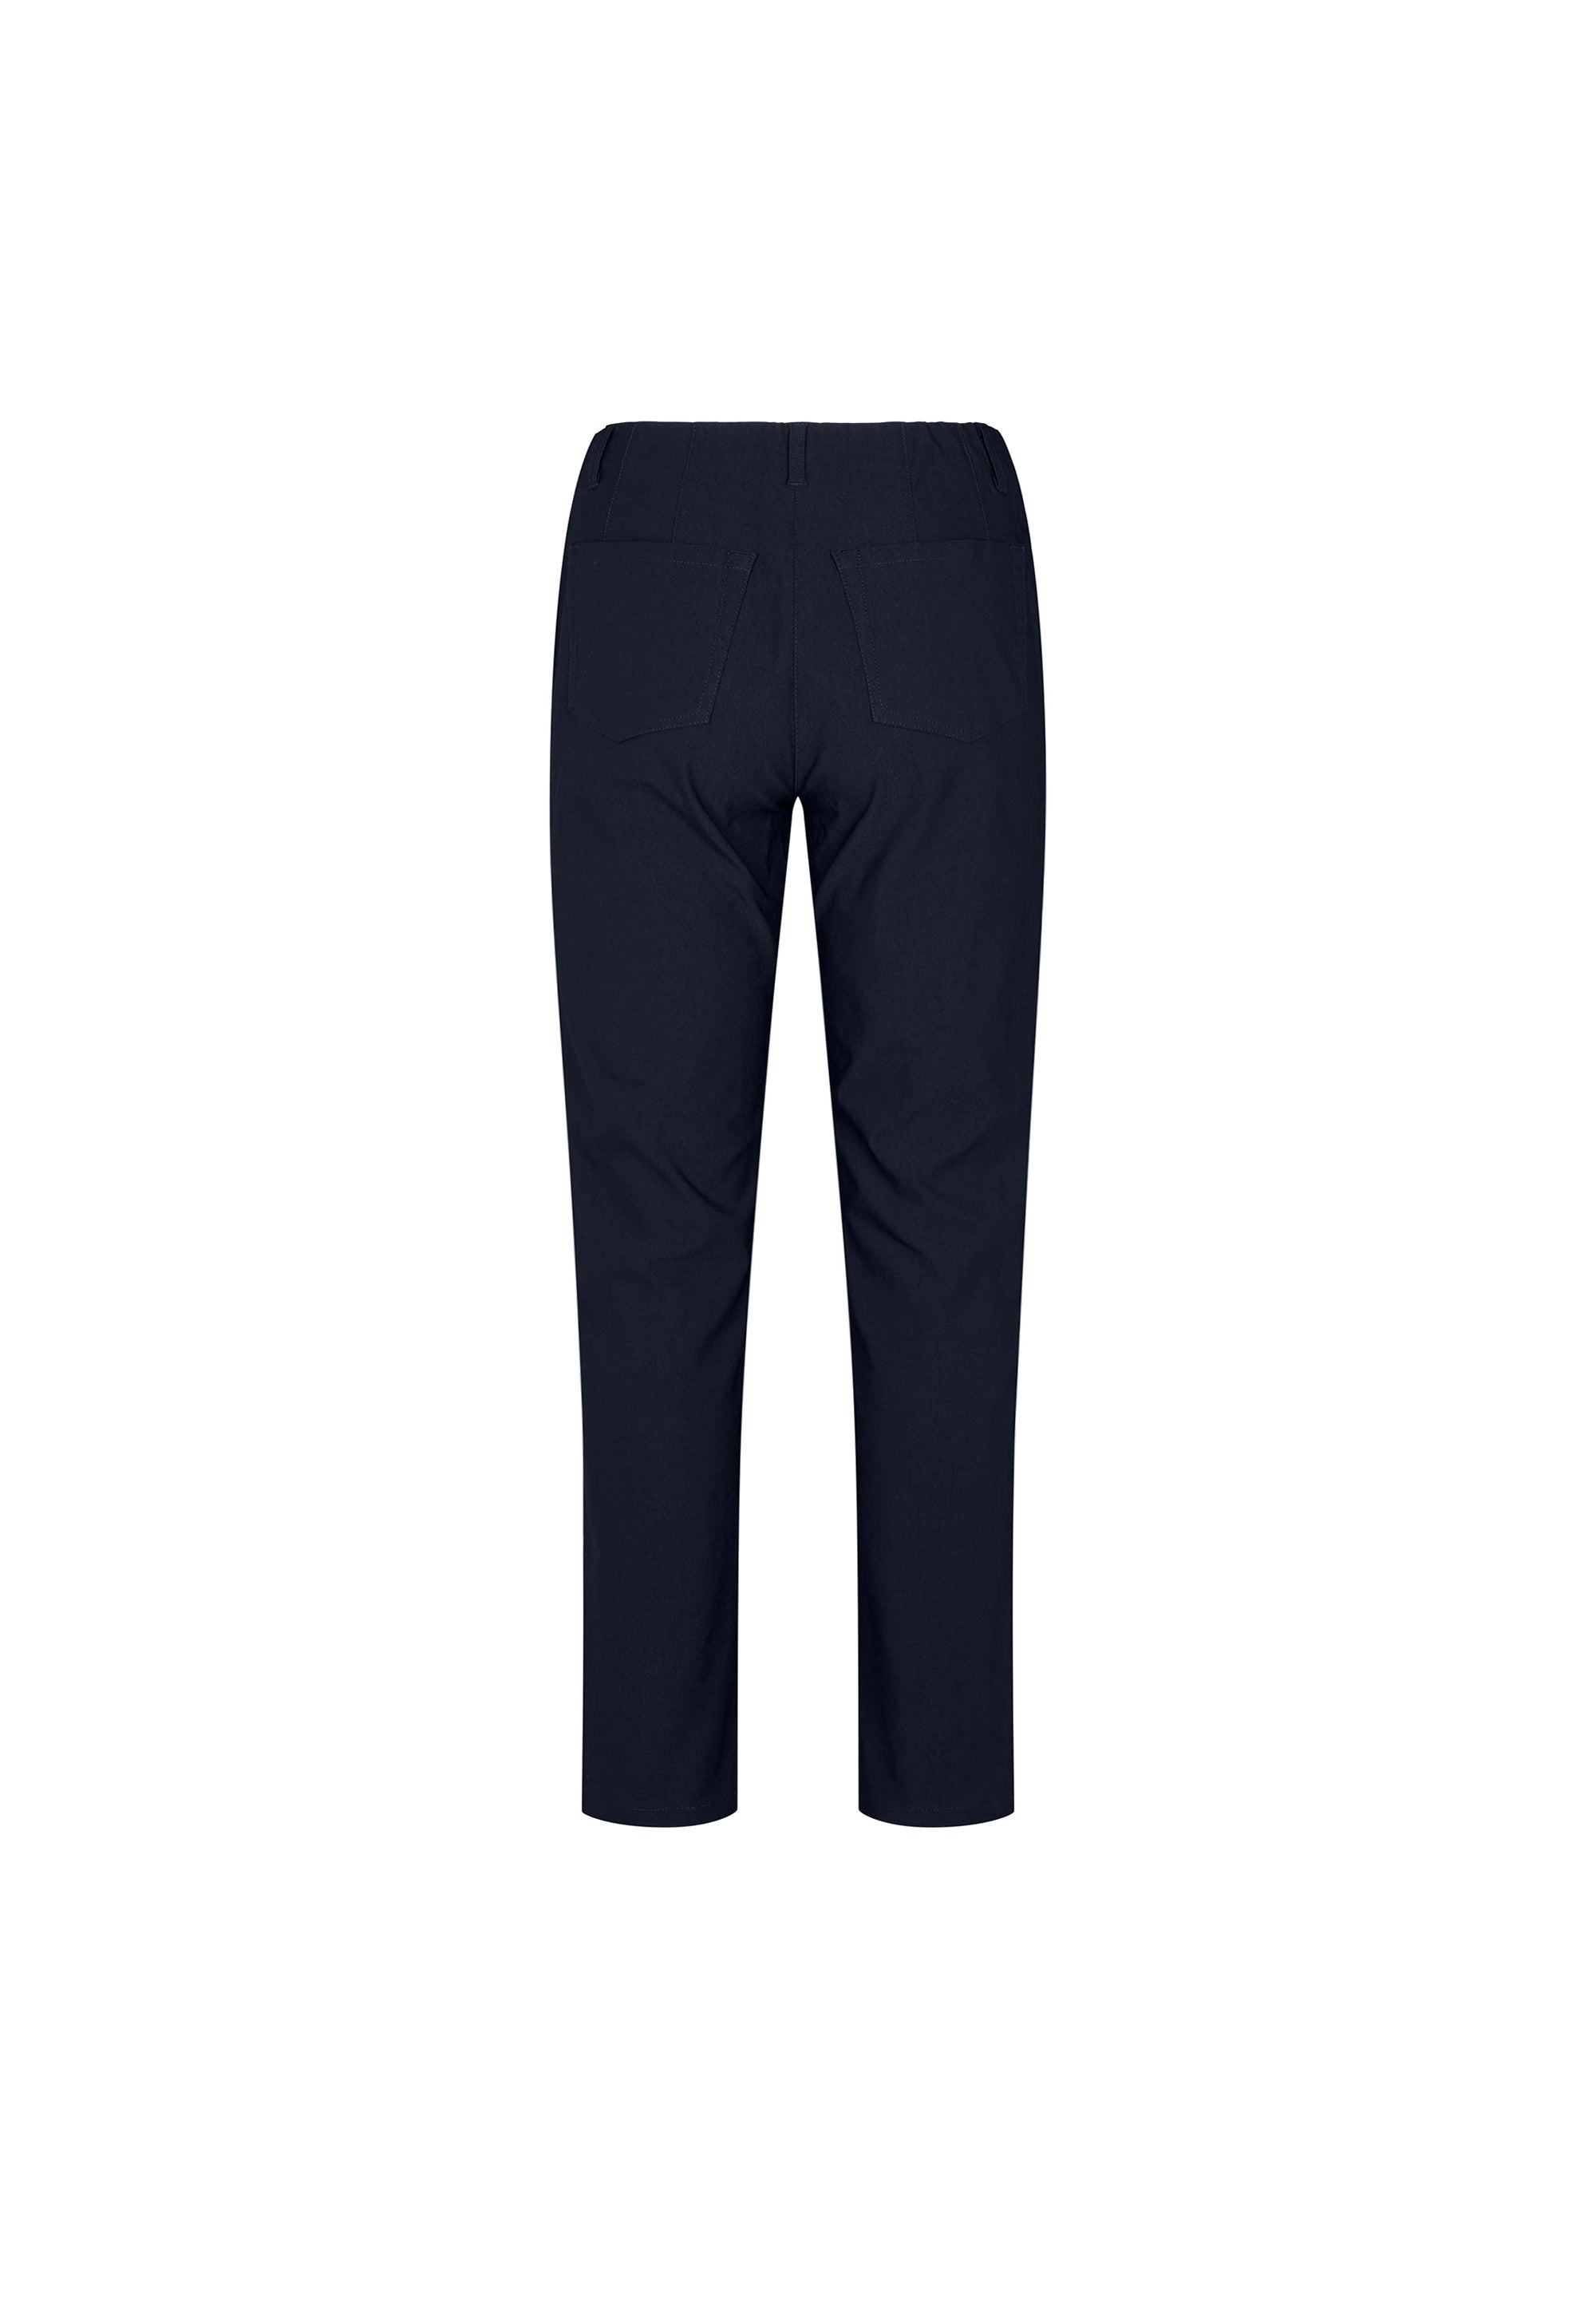 LAURIE Rylie Pocket Regular - Medium Length Trousers REGULAR 99971 Black Brushed